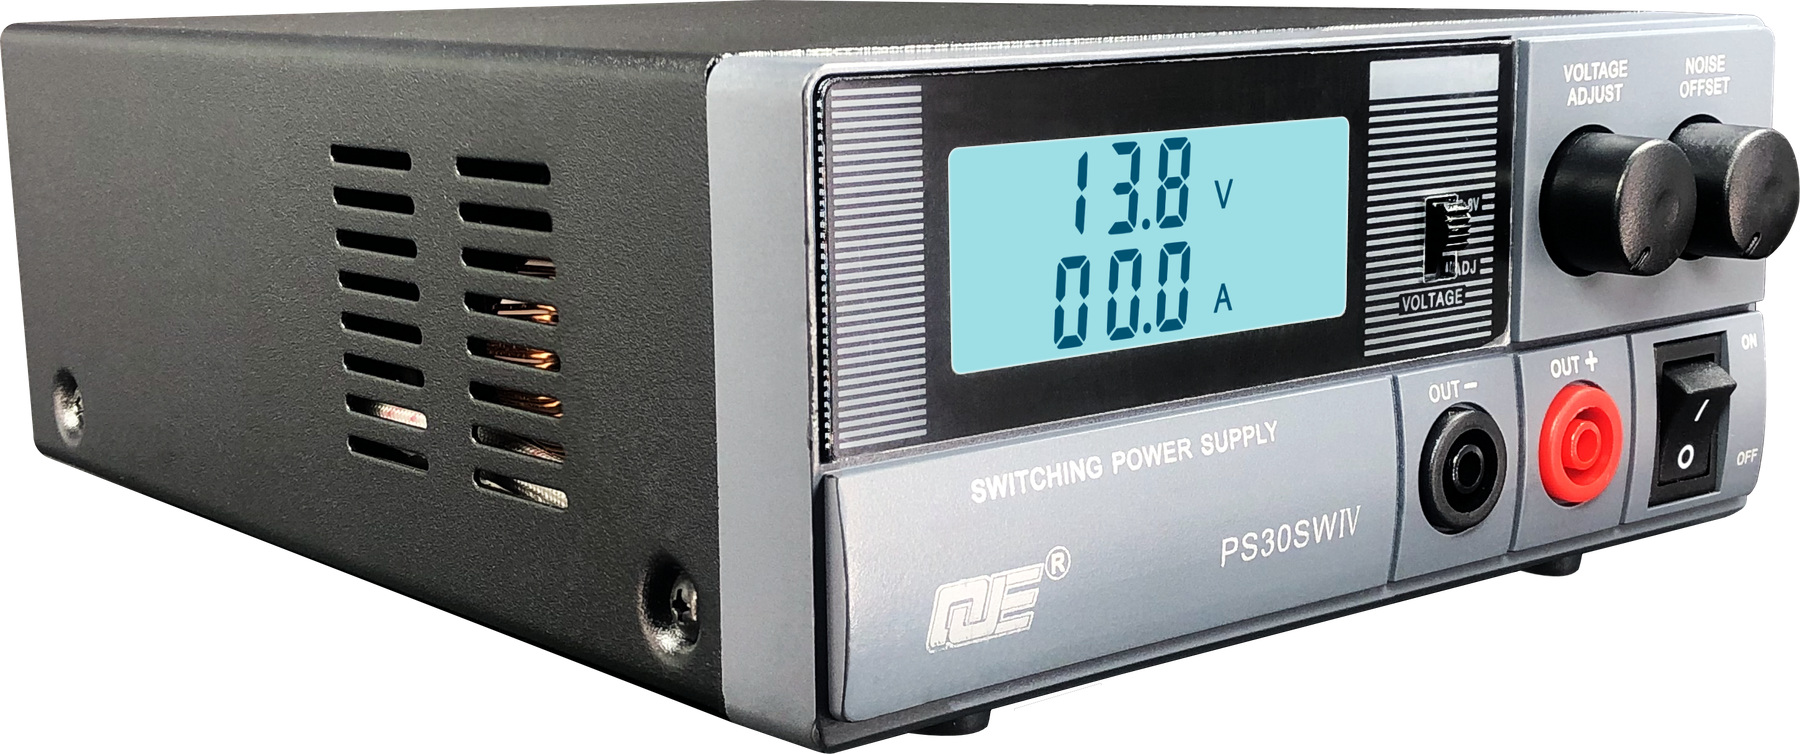 digital meter switching power supply 13.8V qro.cz hamparts.shop